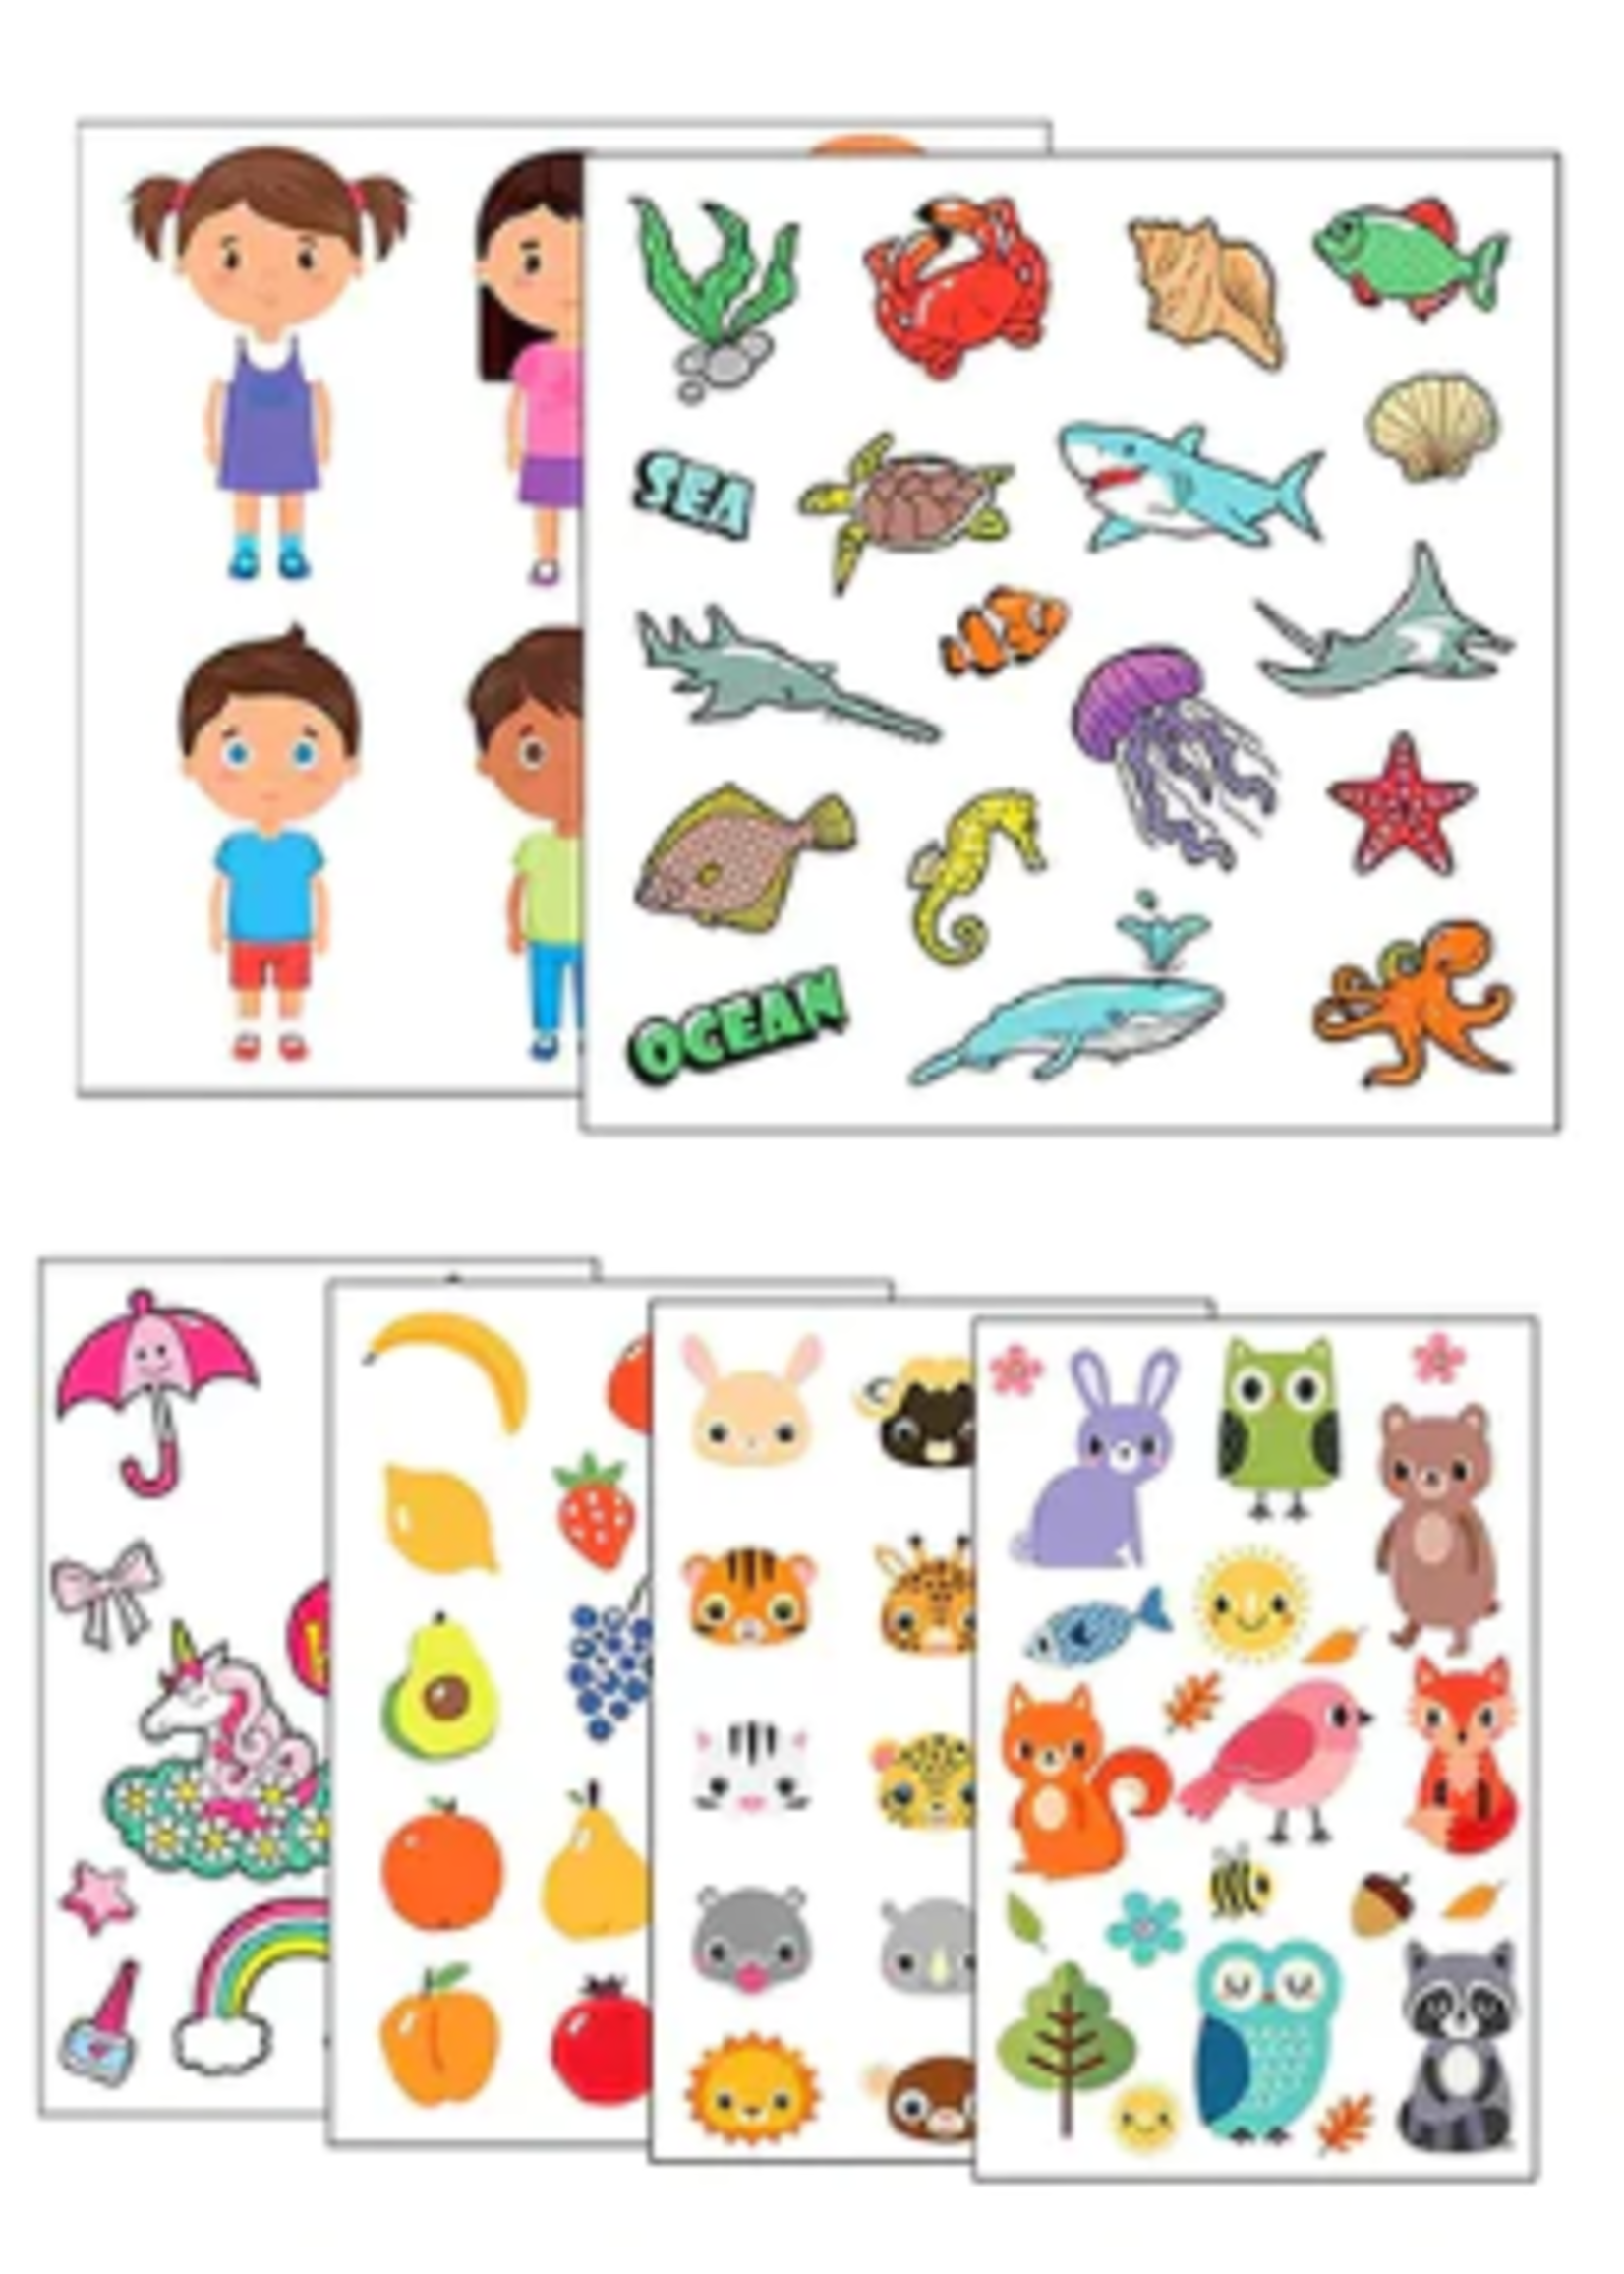 Creative Kids Sense and Grow: My Sensory Sticker Set